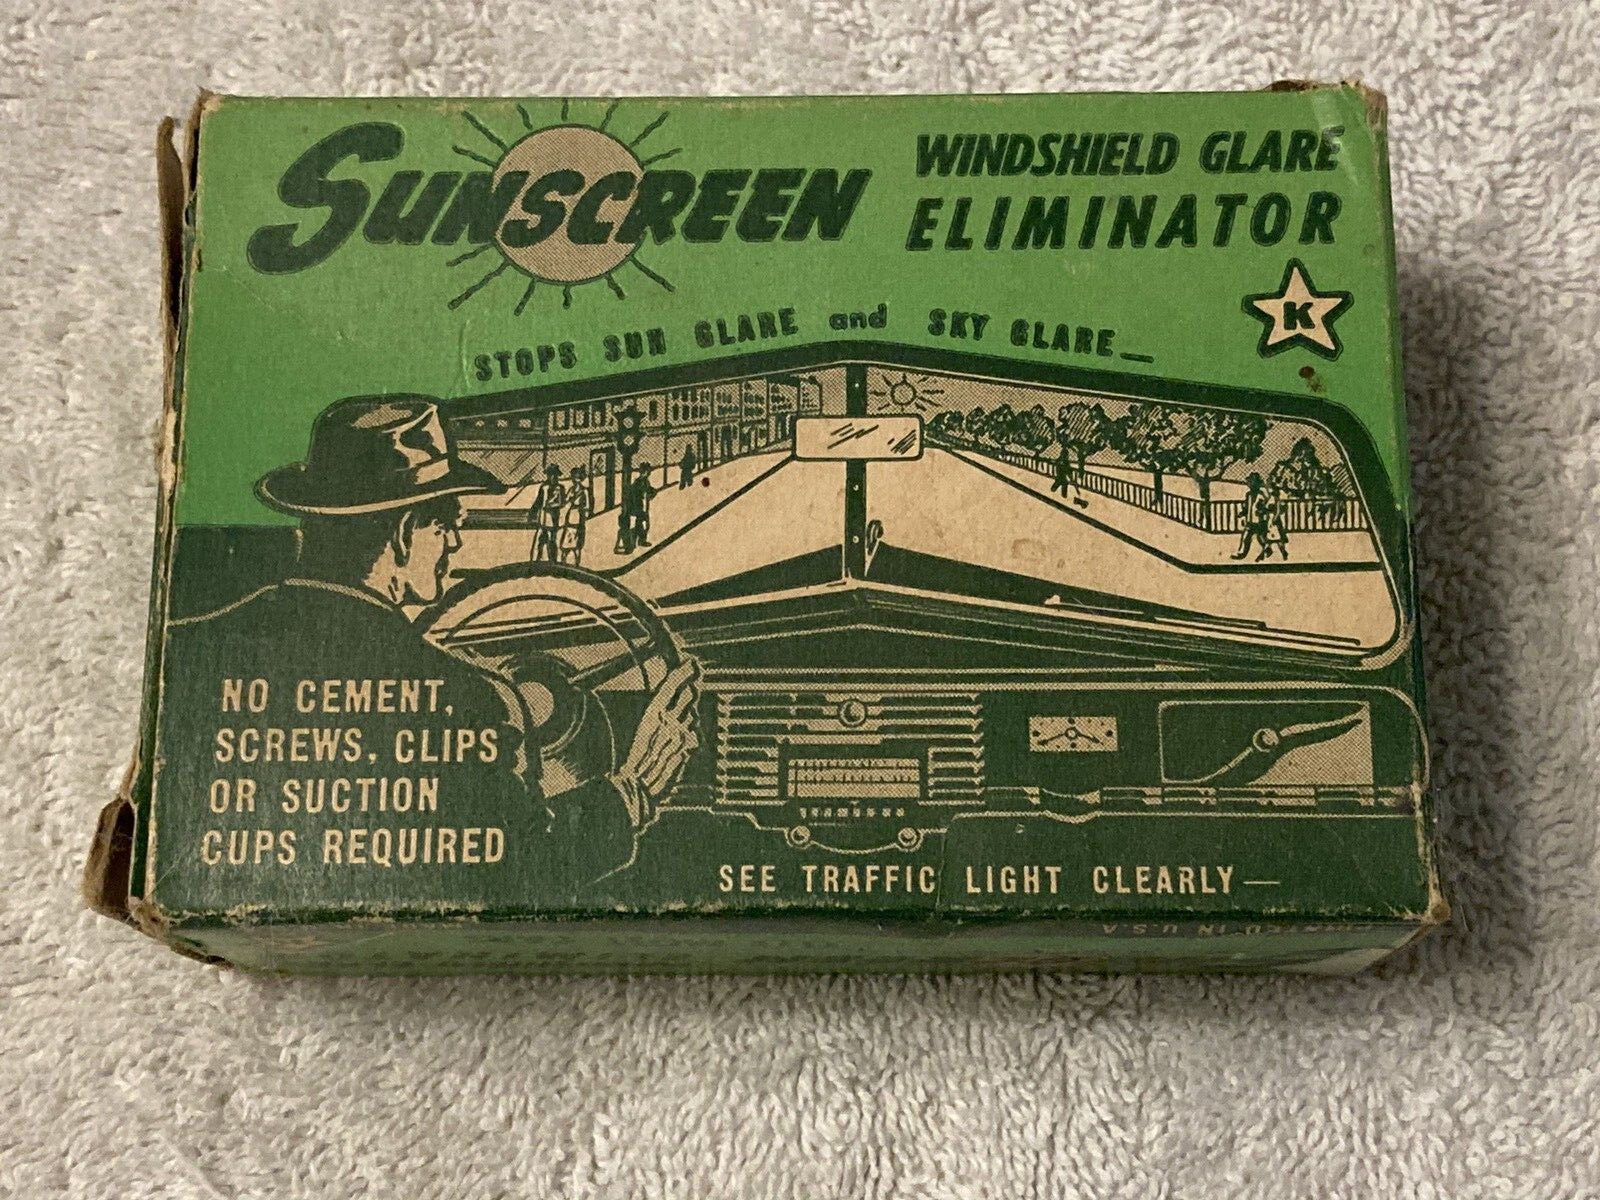 Vintage Sunscreen Windshield Glare Eliminator, No. 226, Kastar Inc., New York.